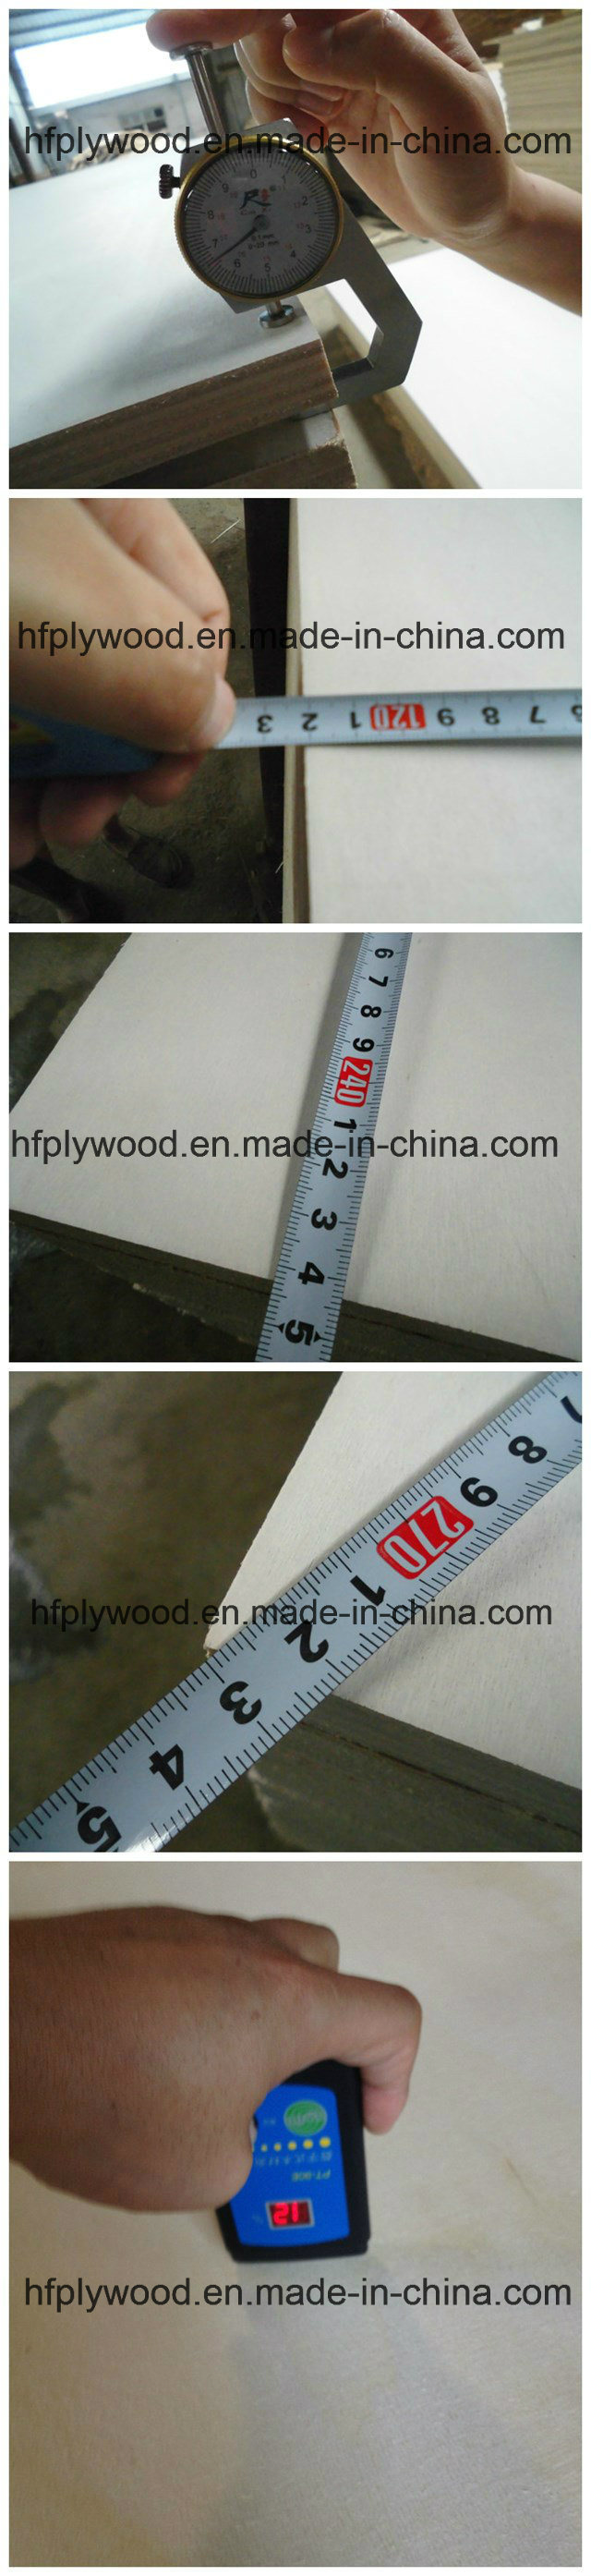 18mm Teak Face Plywood Furniture Use Plywood